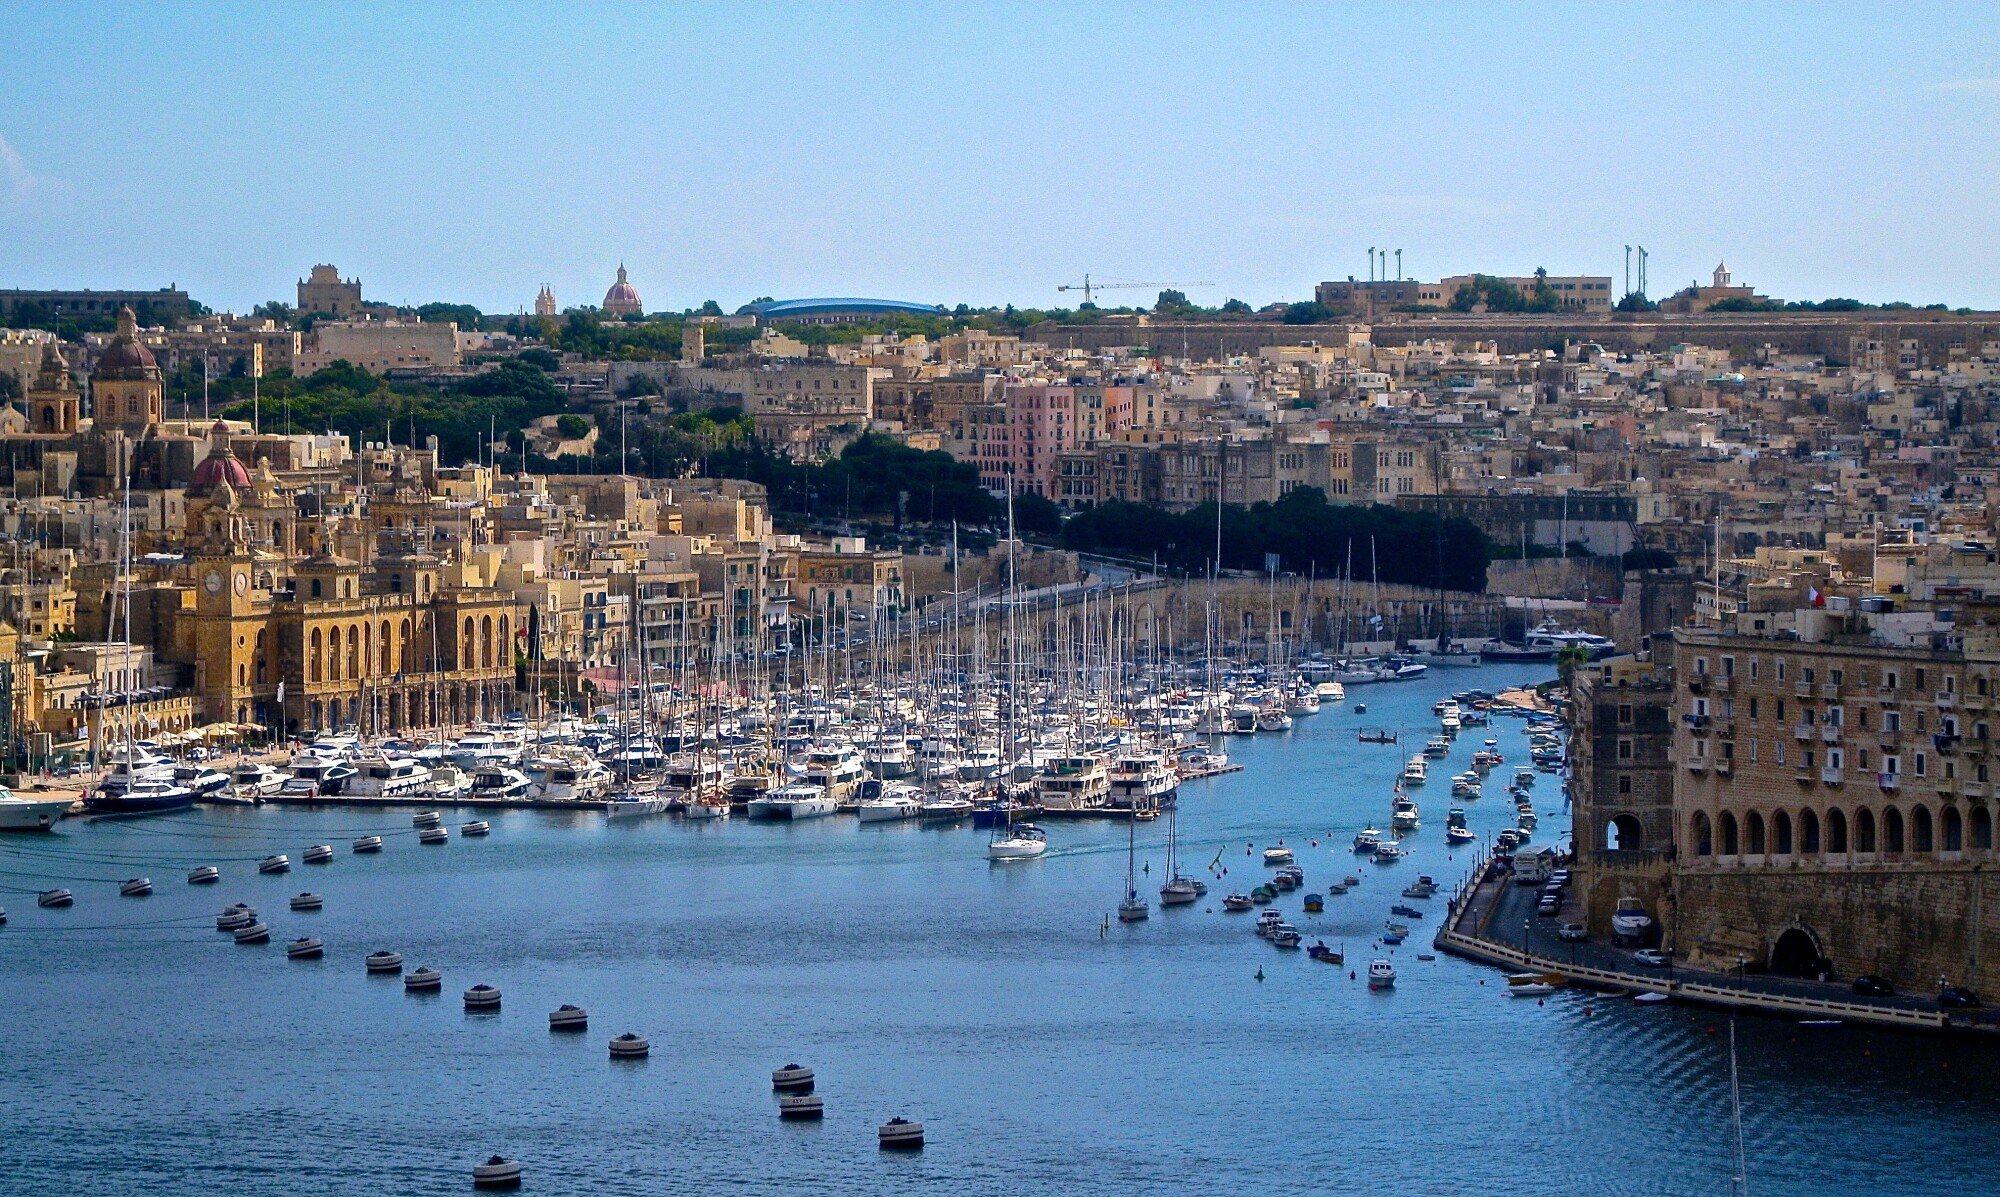 Peak Season Pricing Strategies for Malta Vacation Rentals